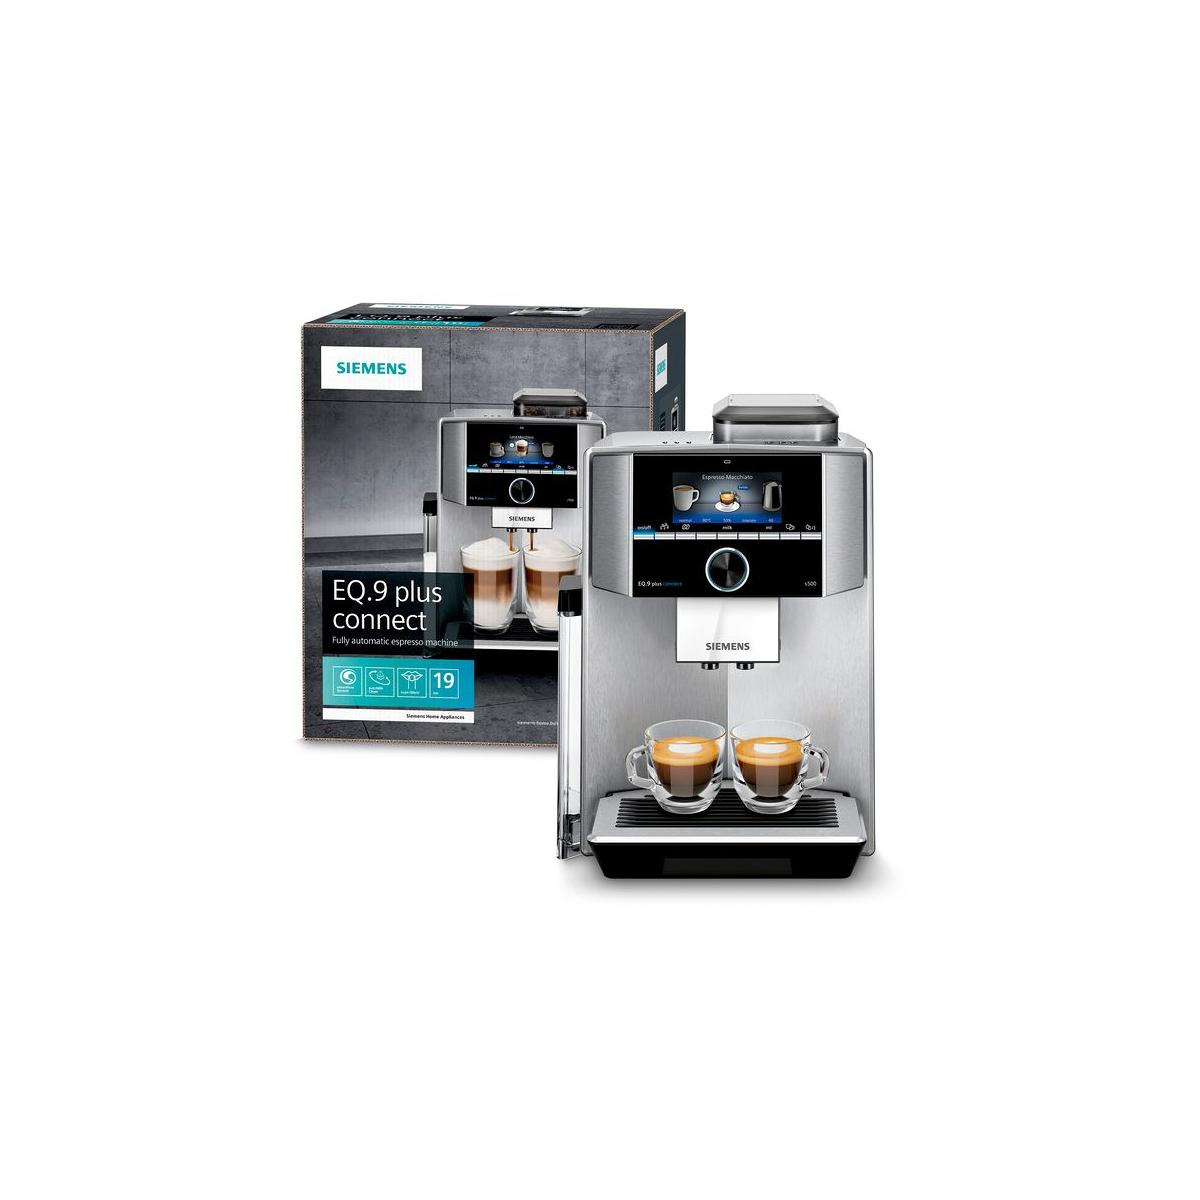 Siemens Edelstahl TI9558X1DE plus Kaffeevollautomat, Wagner auswählbar, s500 Elektroshop EQ.9 connect 1500W, Displaysprache